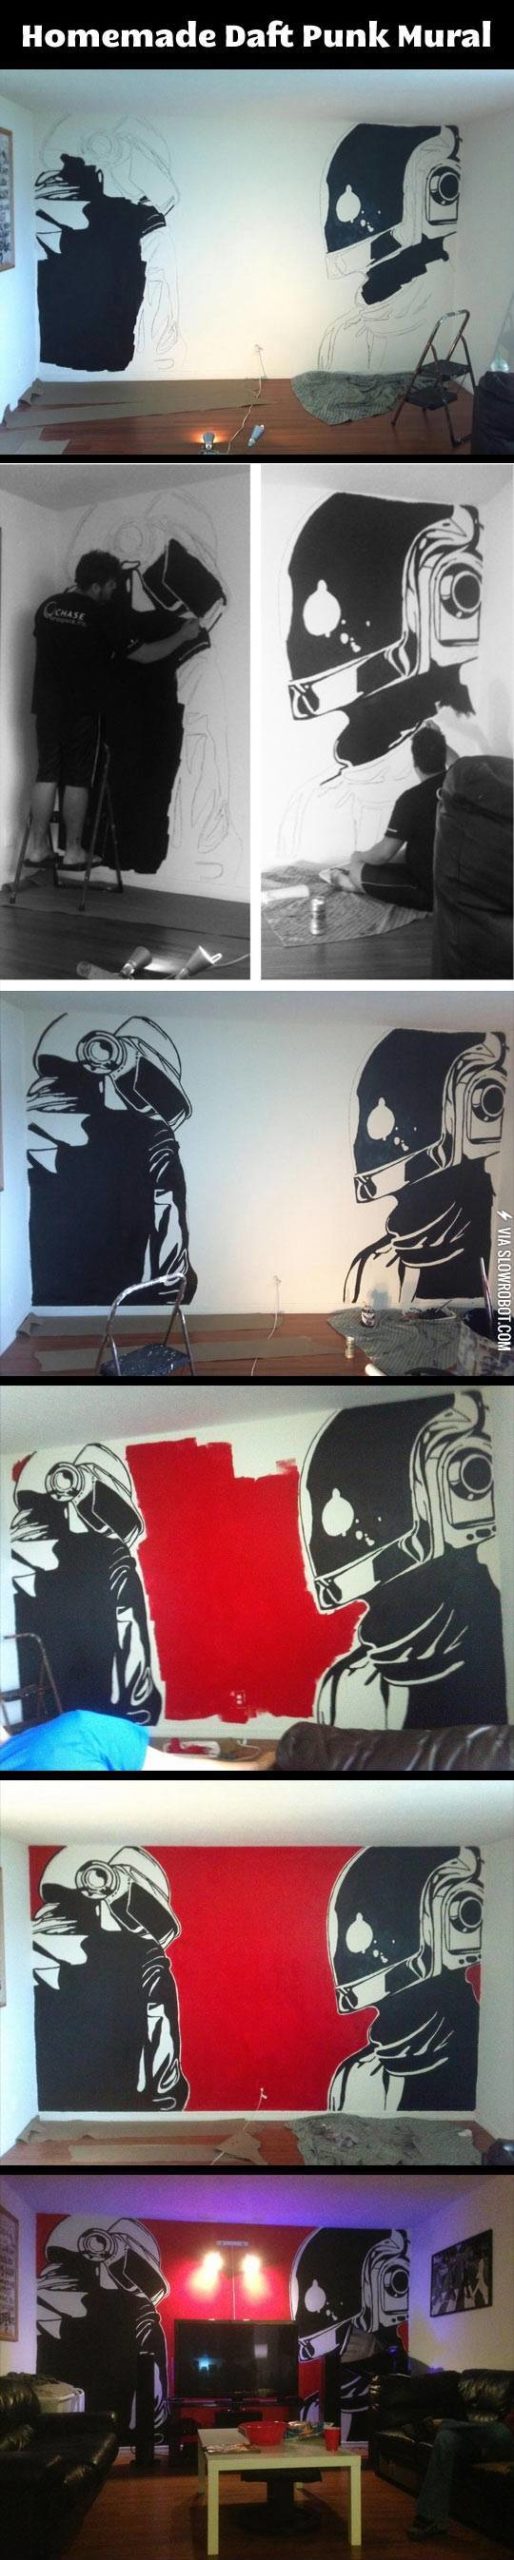 Homemade+Daft+Punk+Mural.